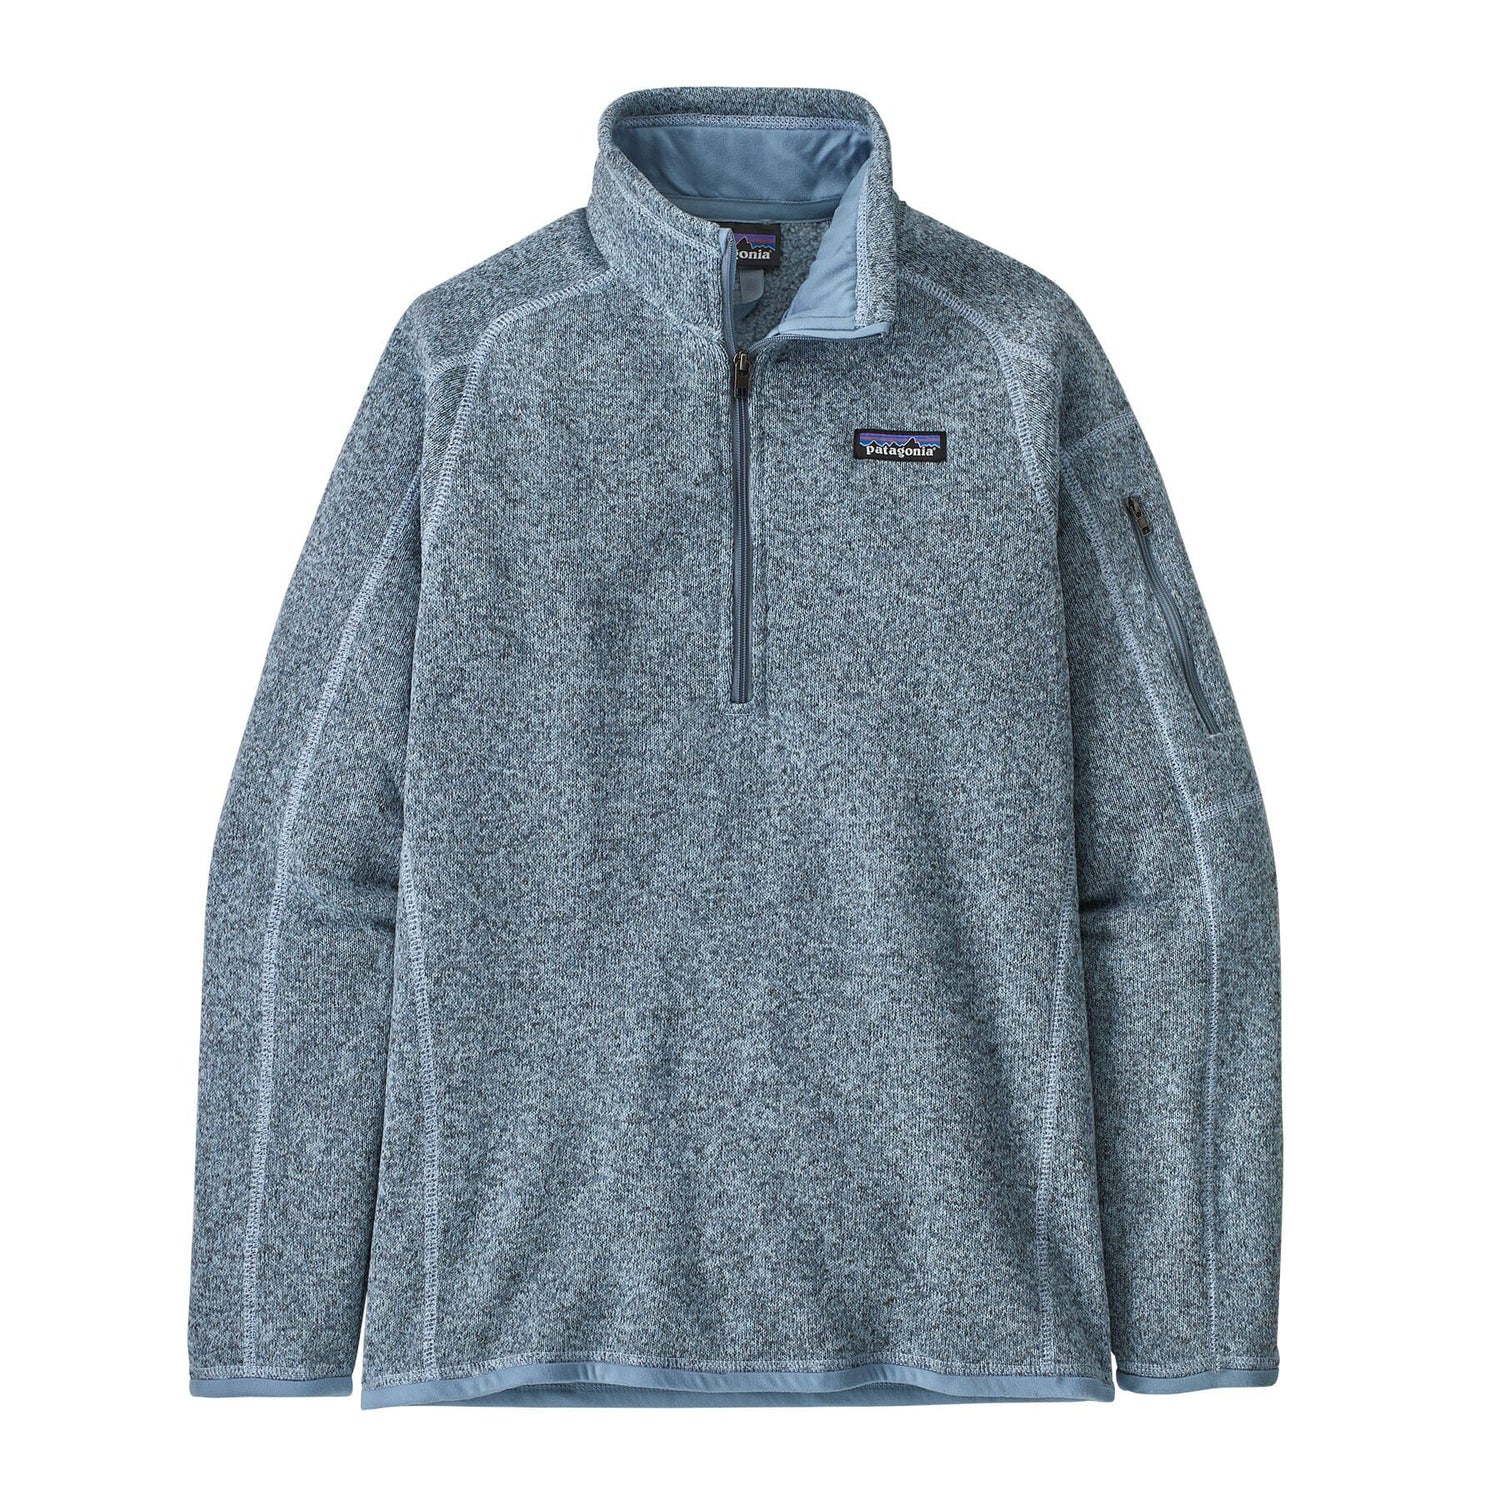 Patagonia - W's Better Sweater 1/4 Zip Fleece - Recycled polyester - Weekendbee - sustainable sportswear